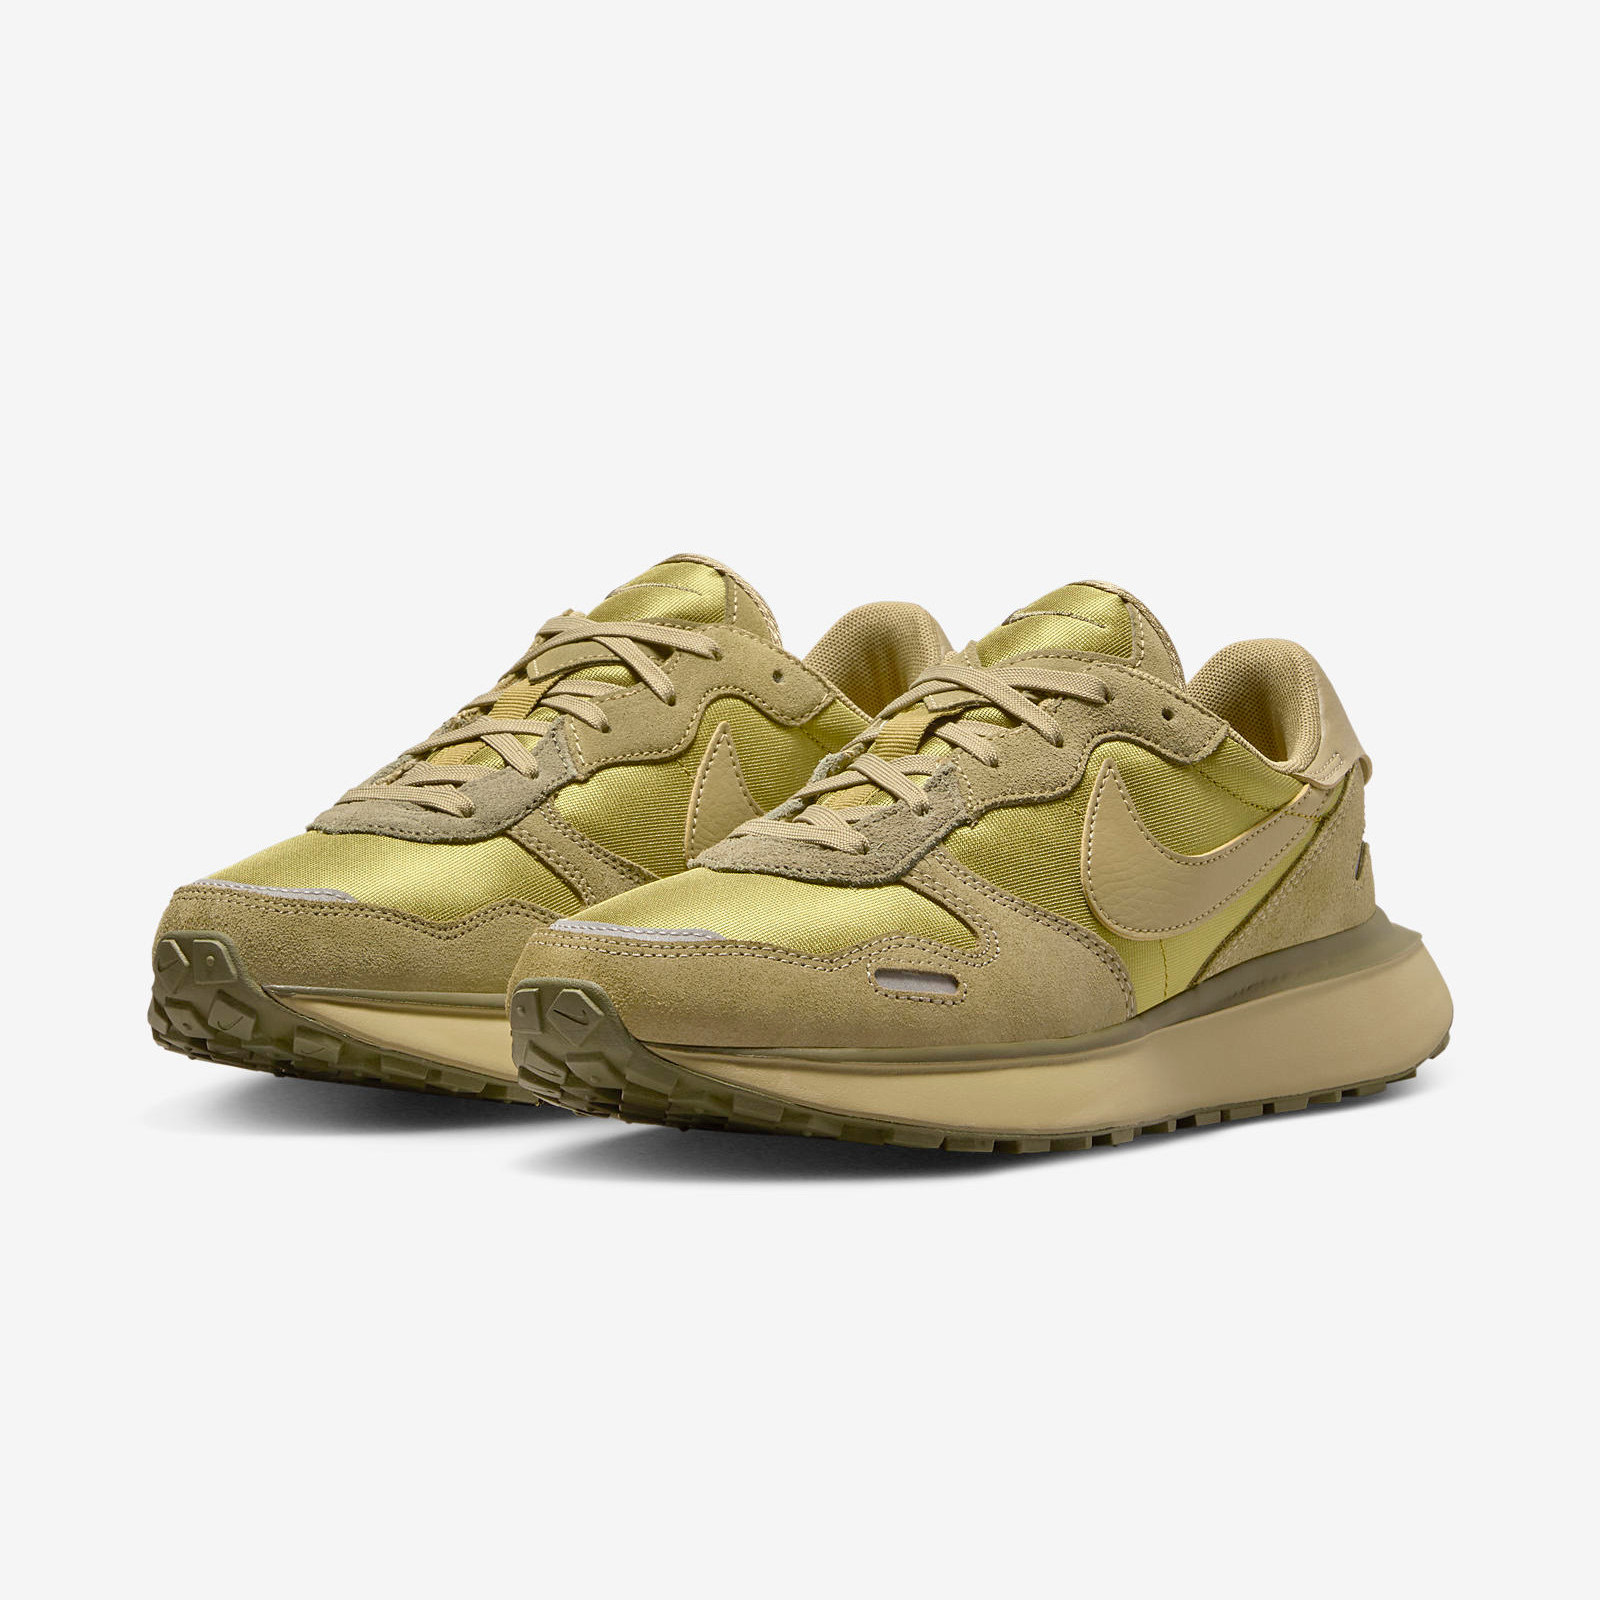 Nike Phoenix Waffle
« Neutral Olive »